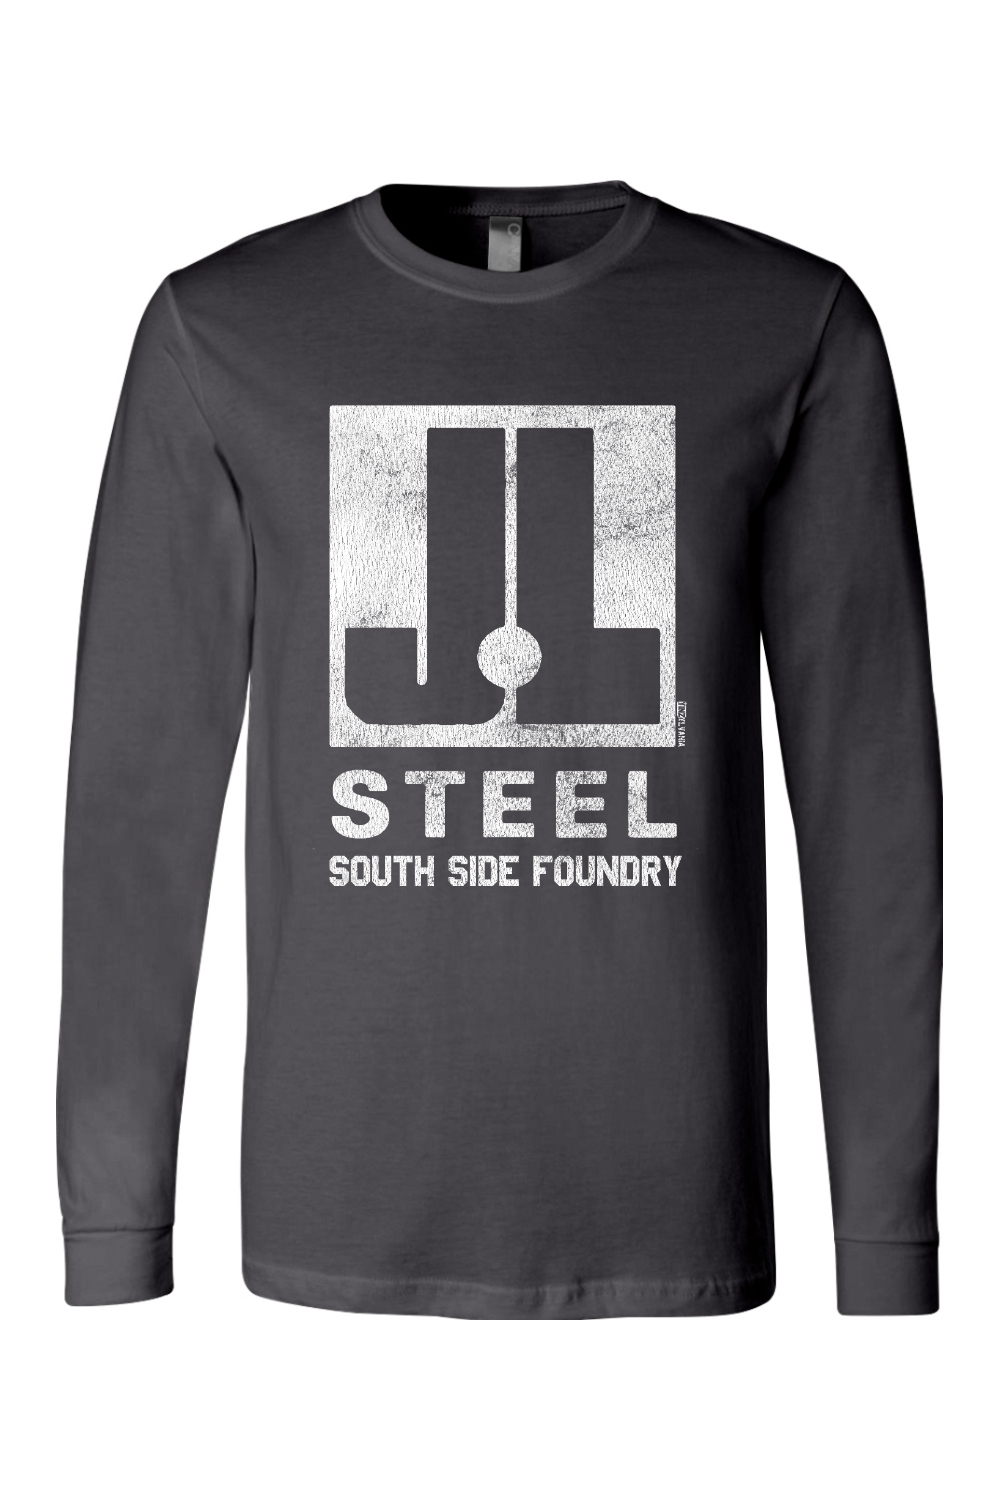 J&L Steel - South Side Foundry - Long Sleeve Tee - Yinzylvania